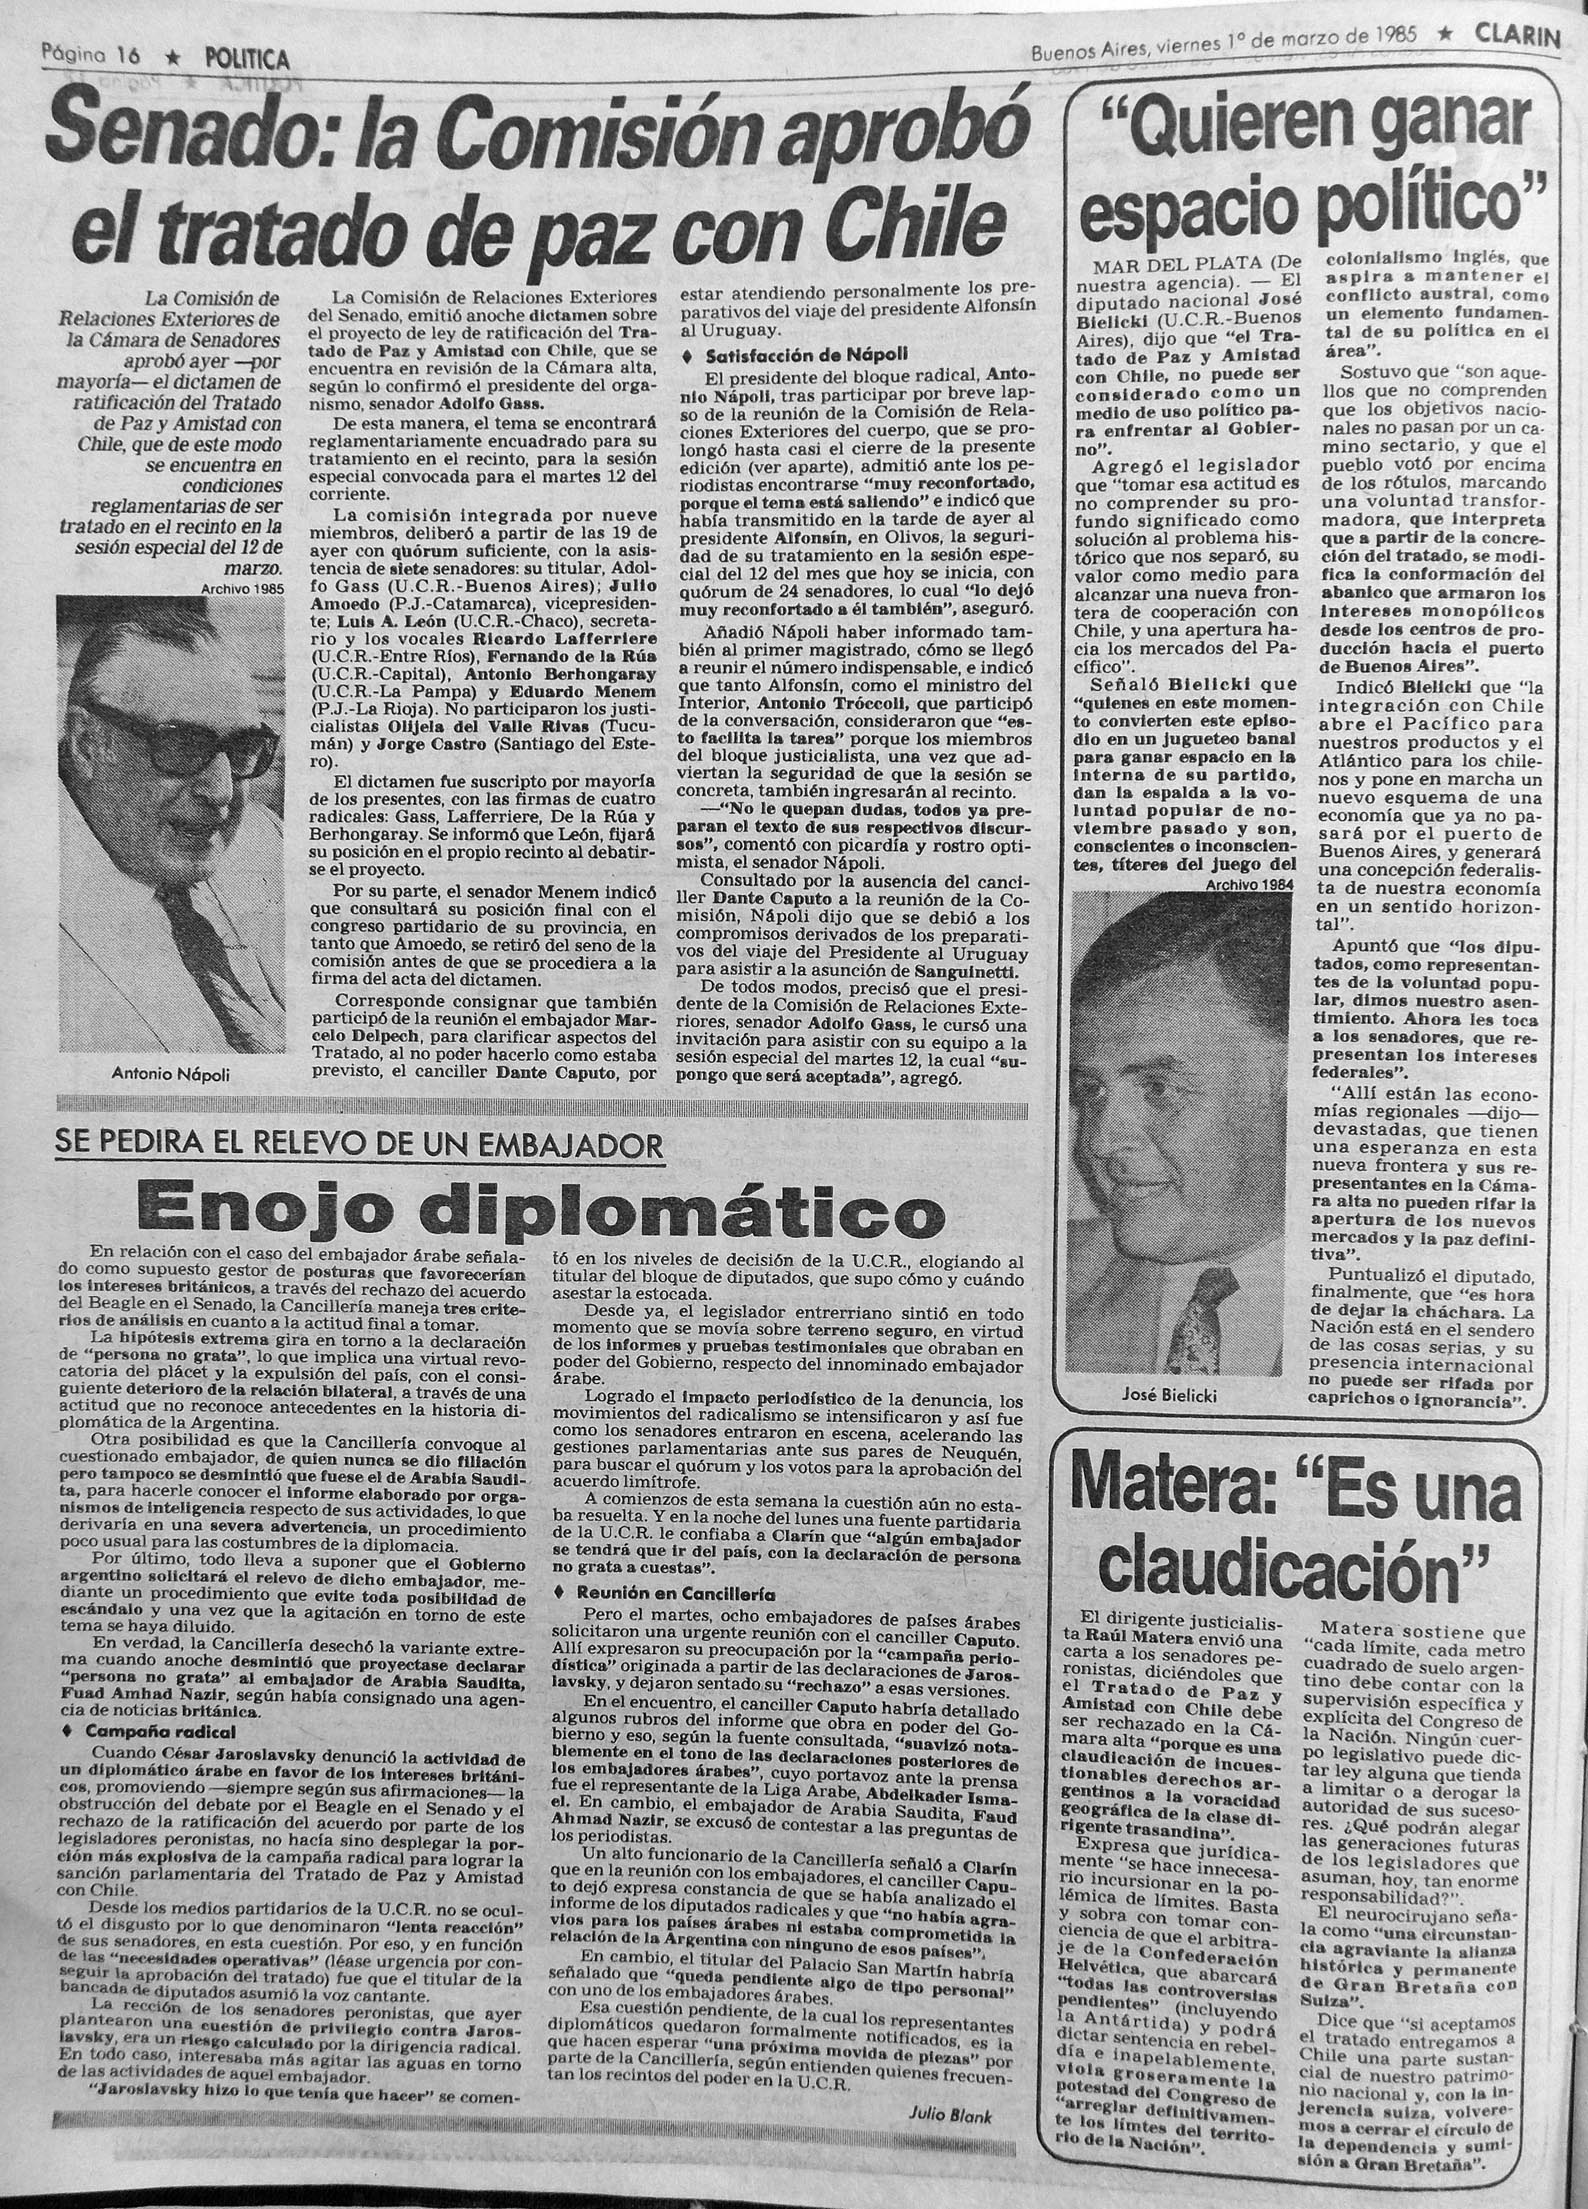 Conflicto con Chile, Clarín, 1/03/1985.